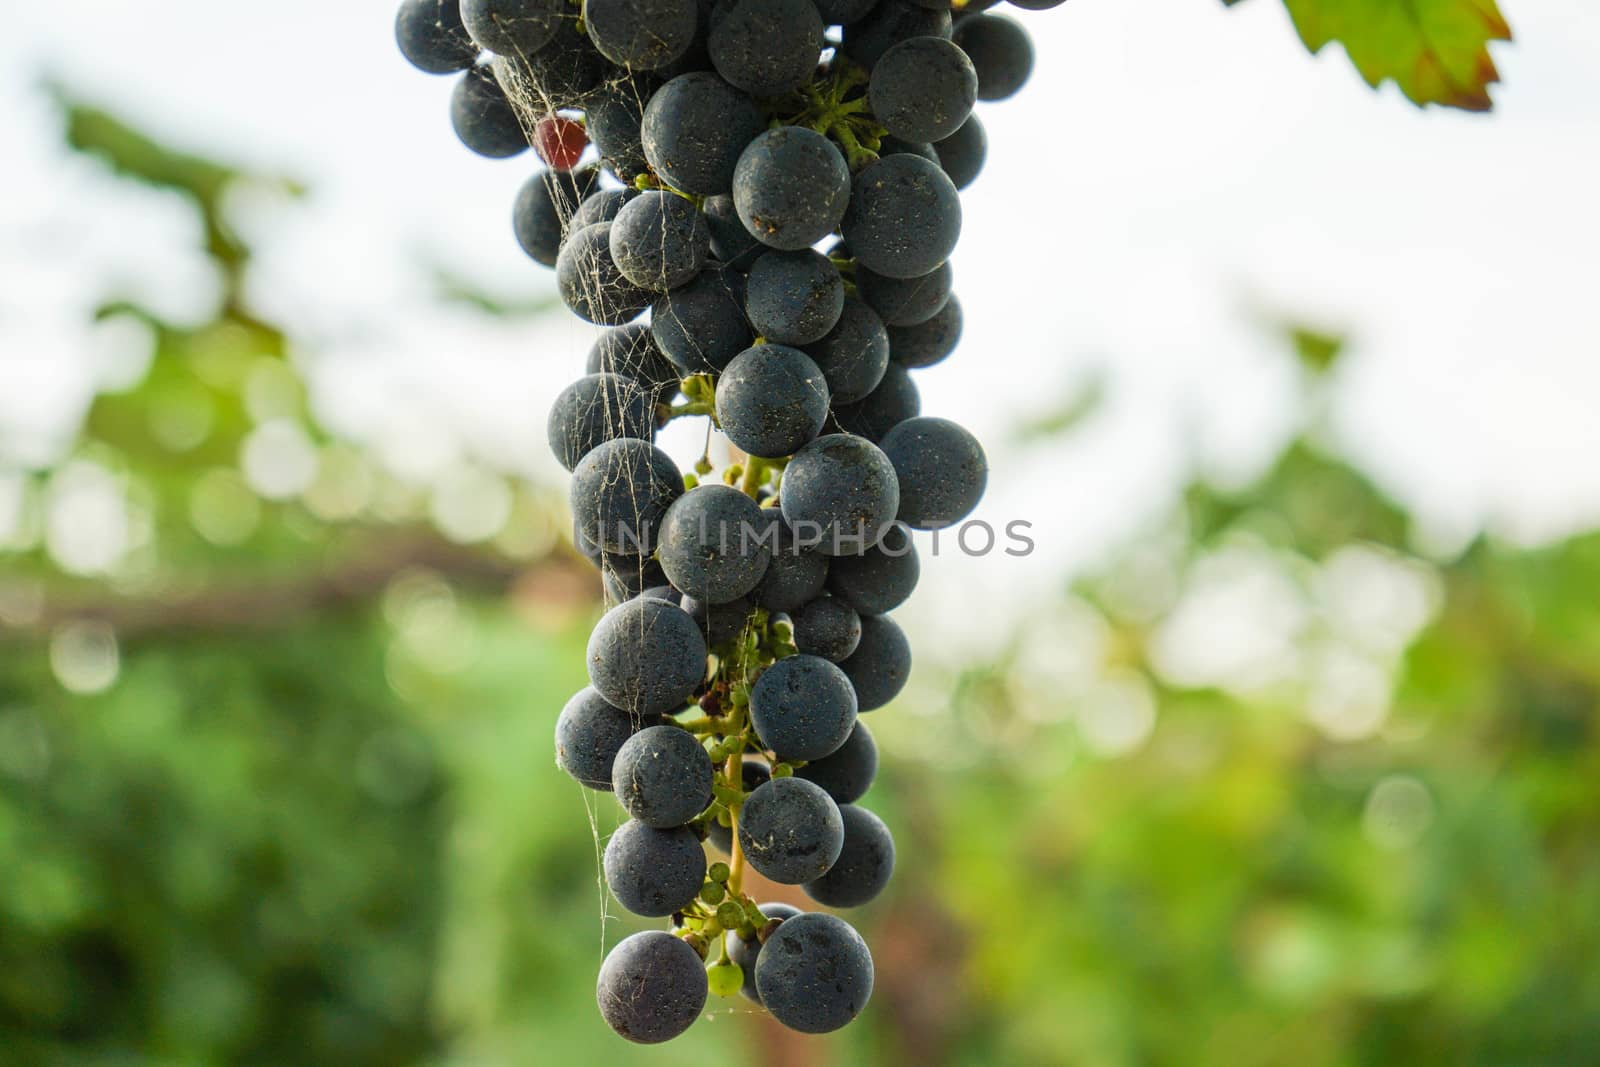 Vineyards in Barolo, Piedmont - Italy